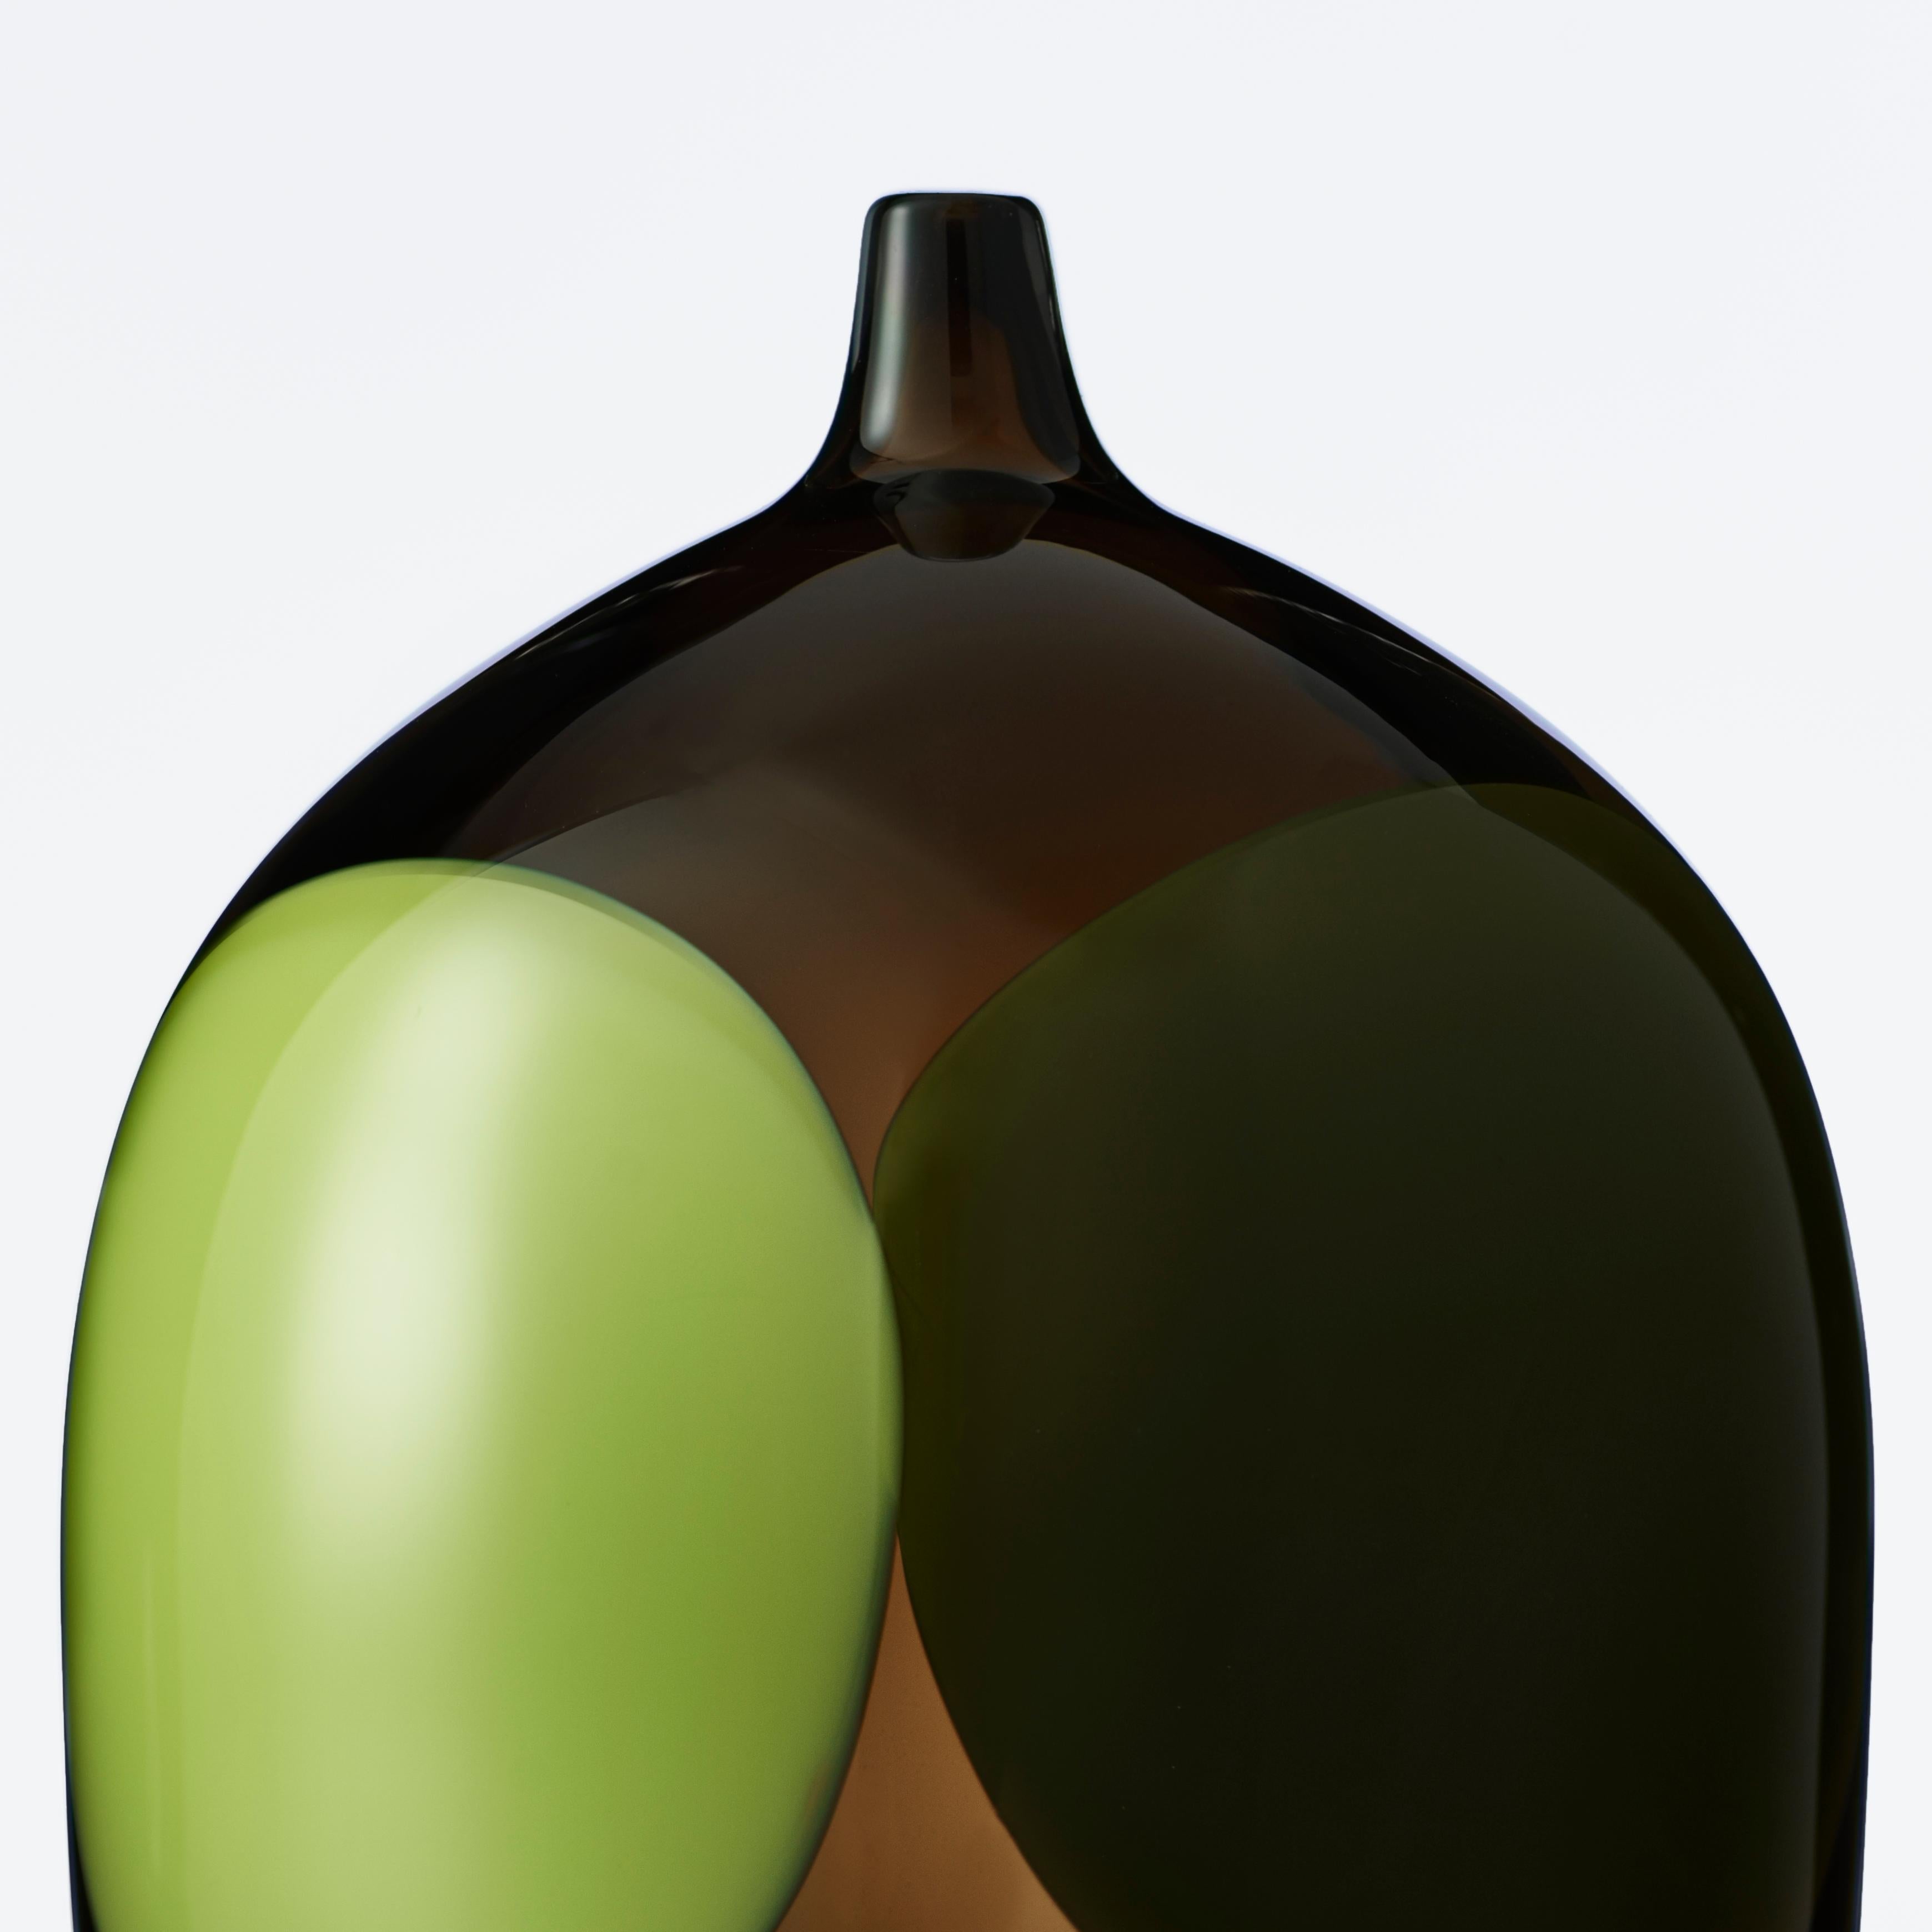 Hand-Crafted Trillium, a Unique Tobacco Brown, Green & Alabaster Glass Vase by Gunnel Sahlin